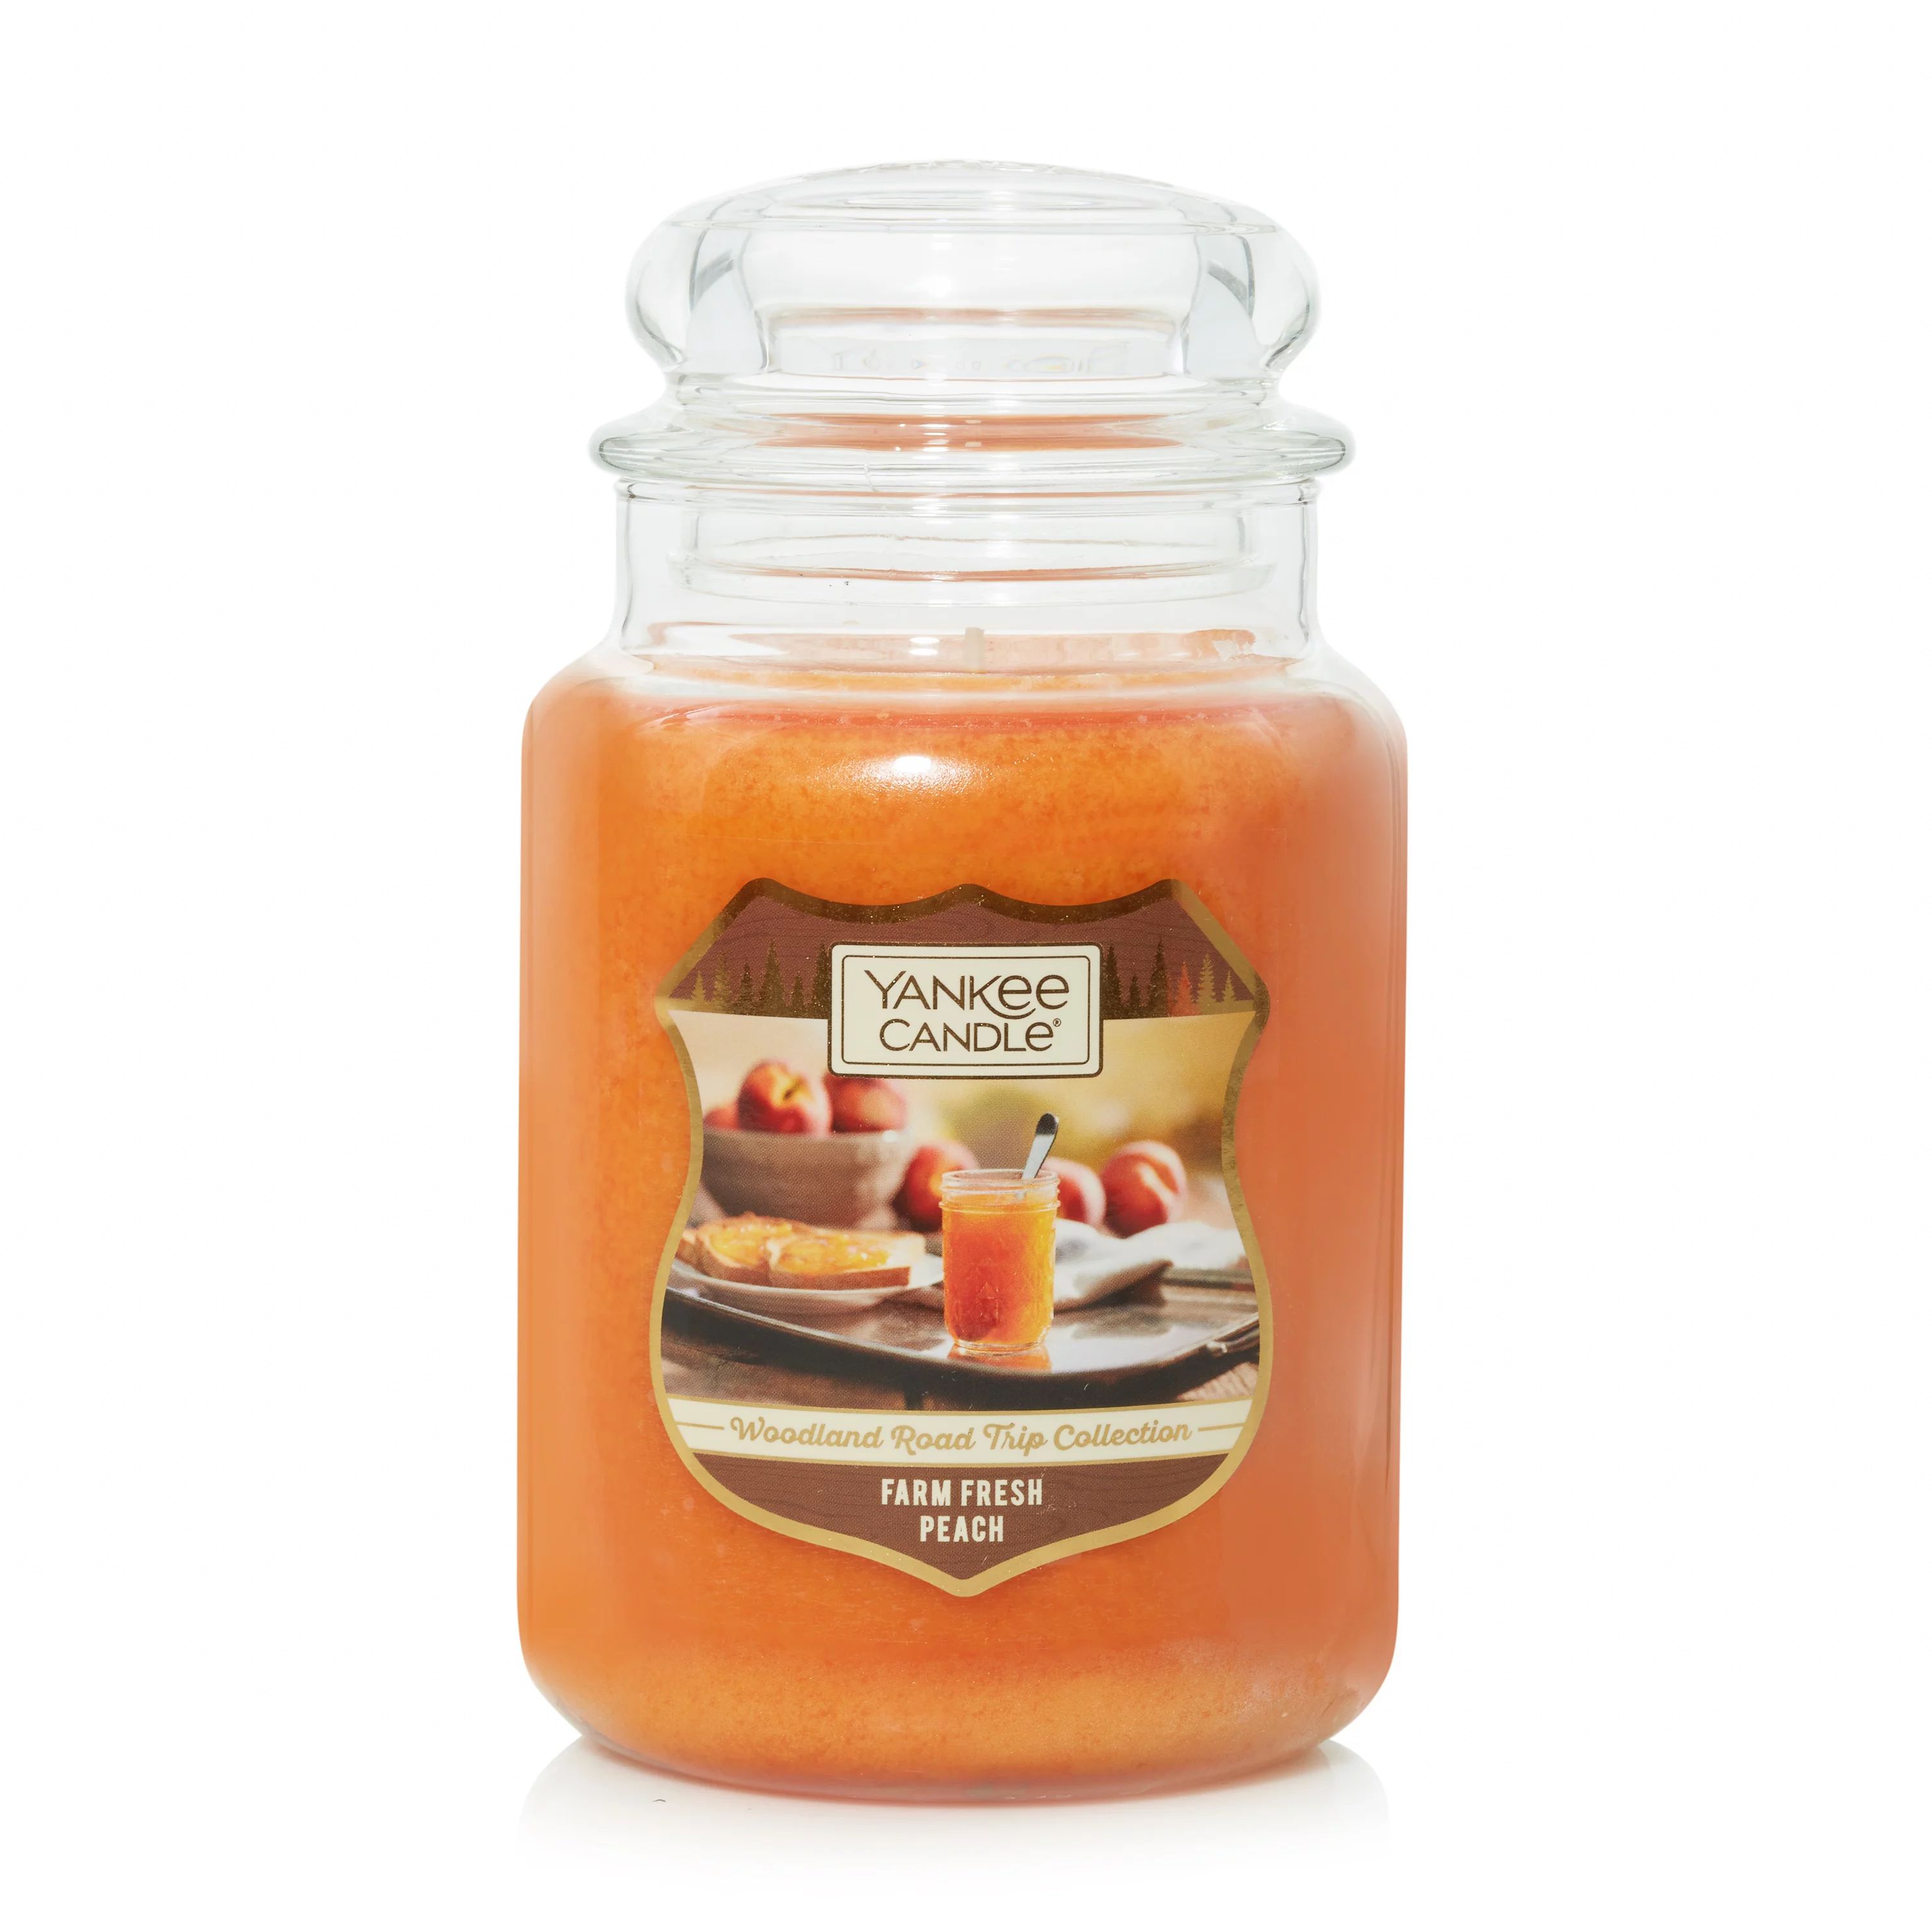 Yankee Candle Farm Fresh Peach - Original Large Jar Candle | Walmart (US)